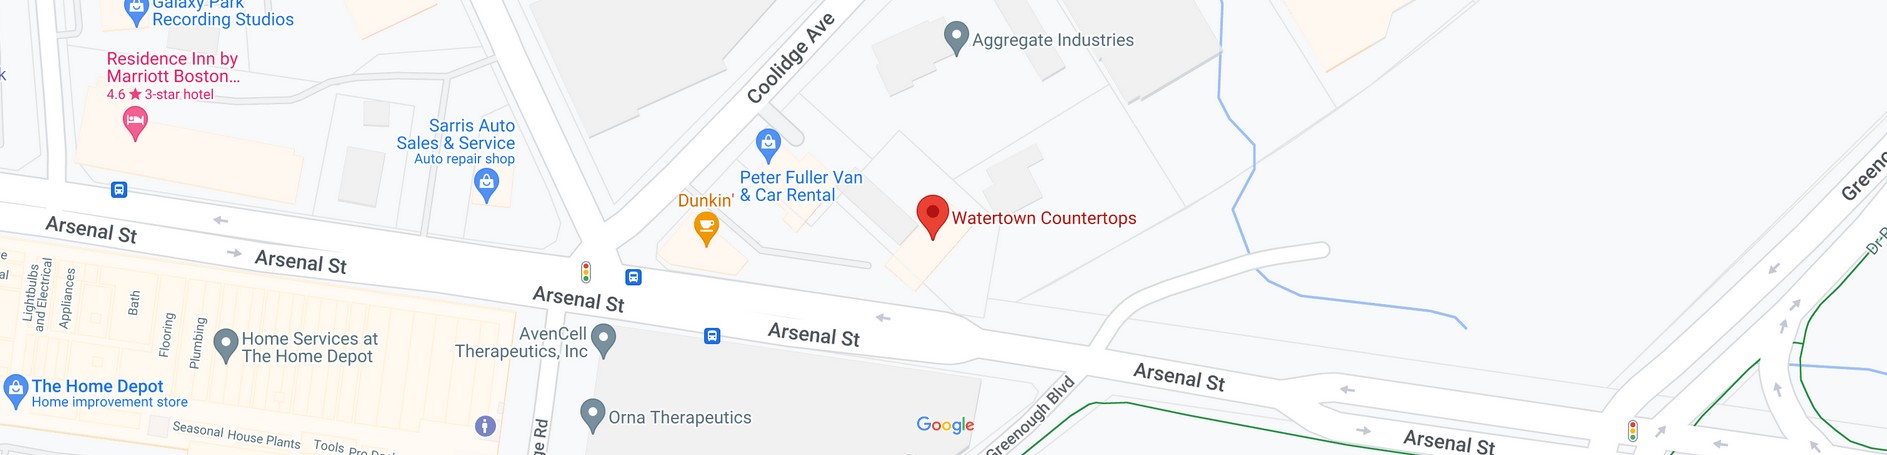 Watertown Countertops & Stone location